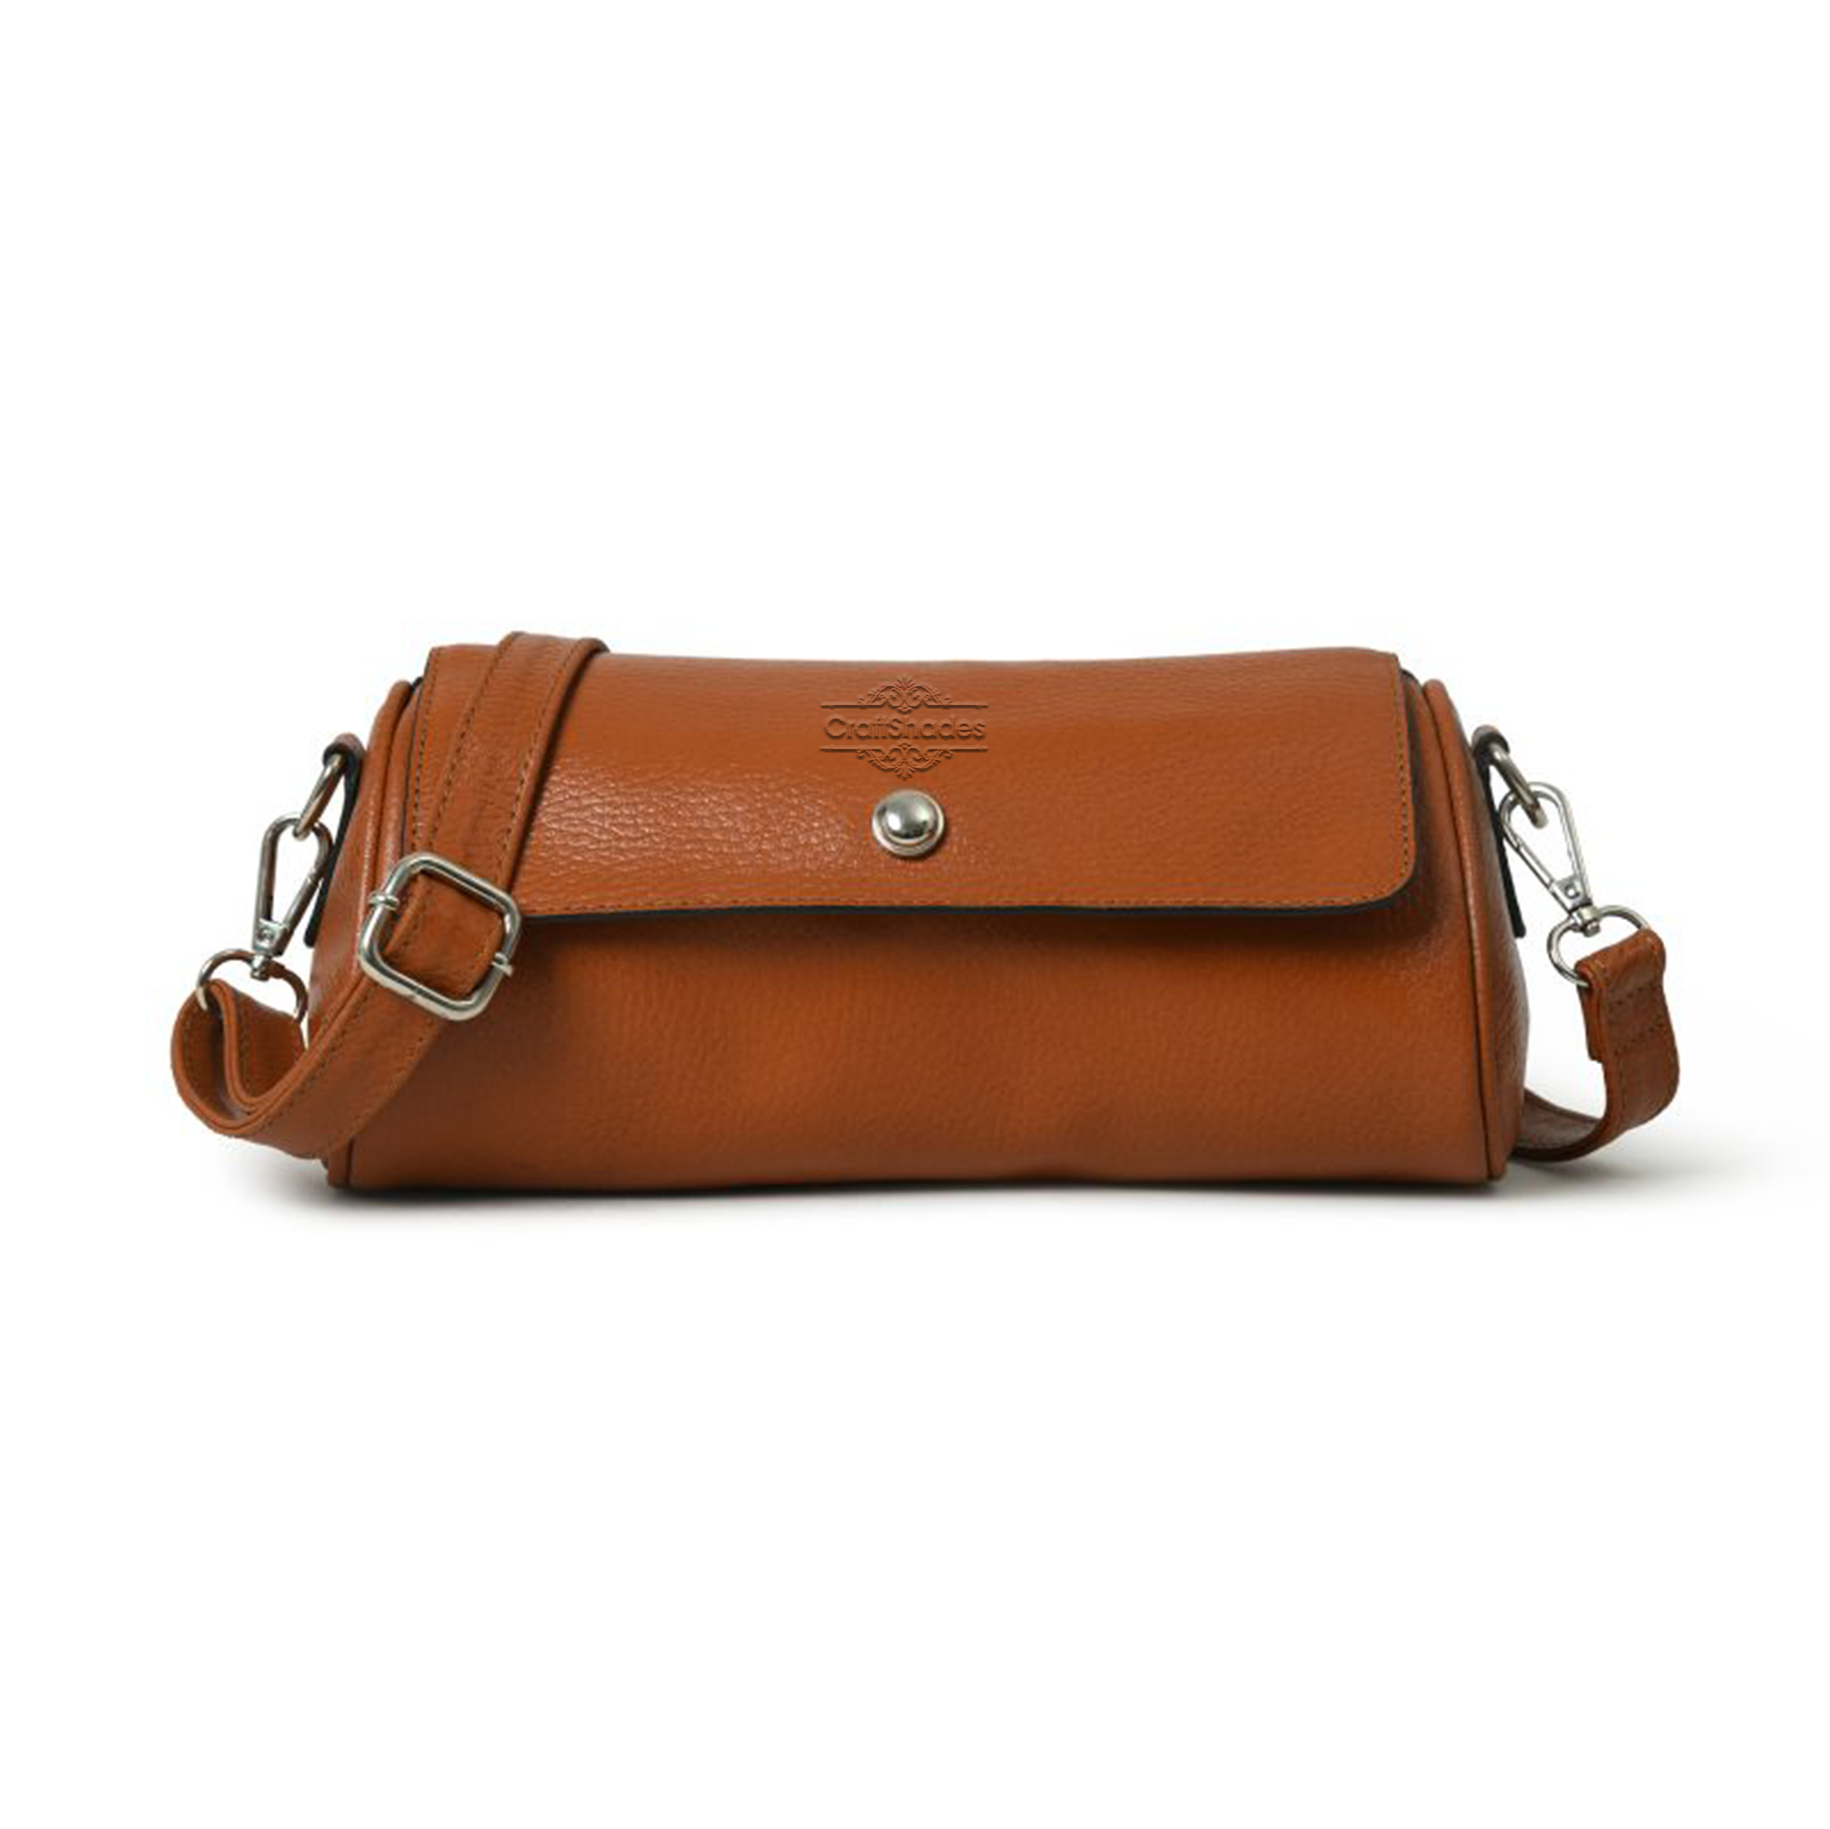 Handbag / Purse Vendor List (Instantly Emailed) – Girl Boss Entrepreneur